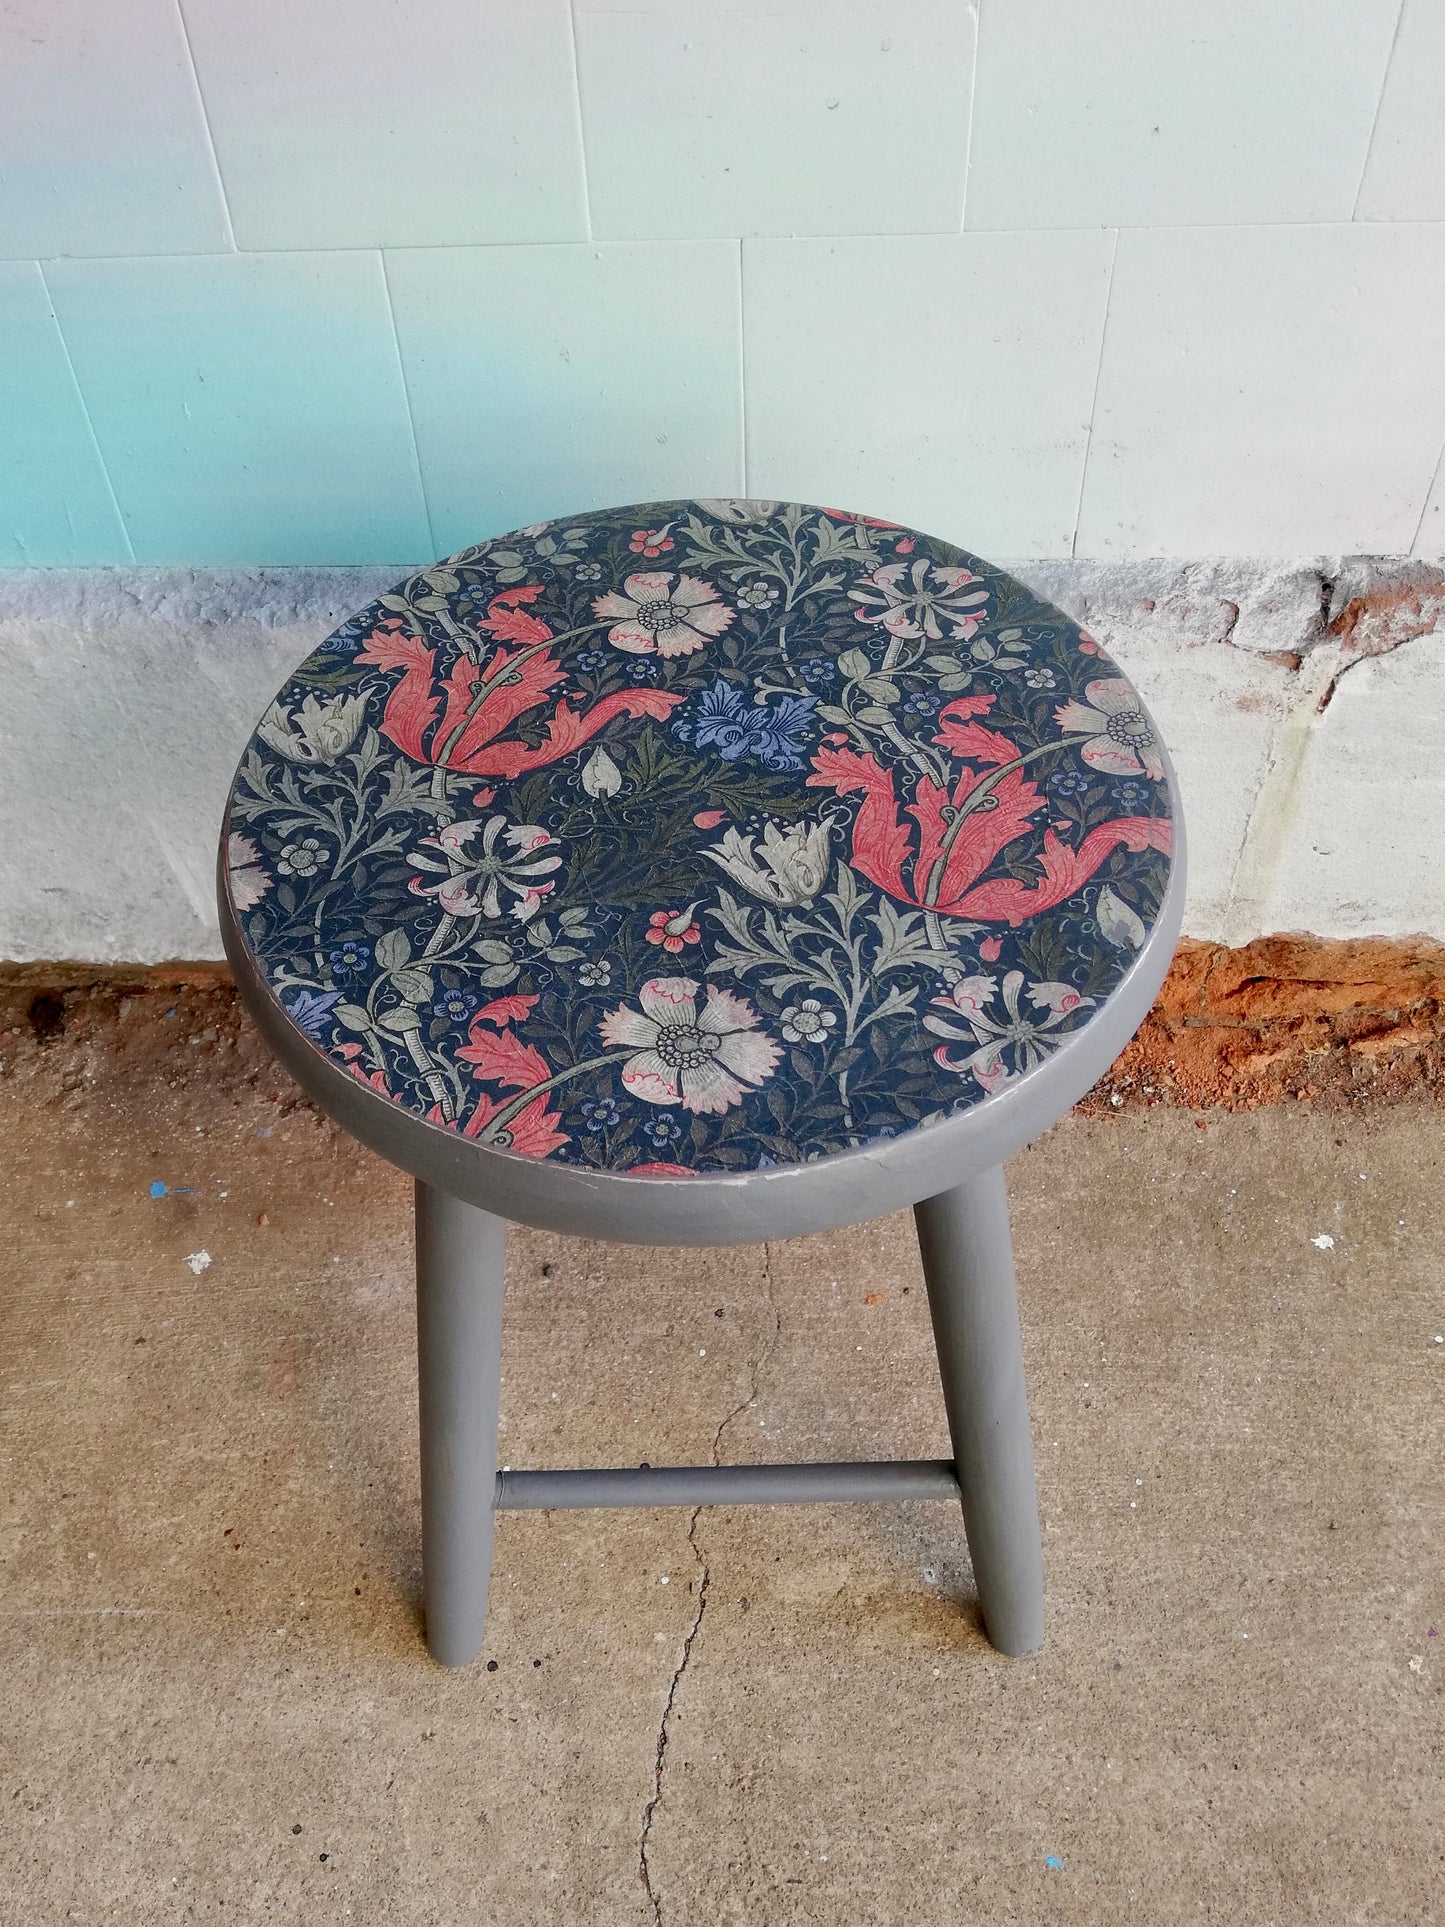 Vintage round decoupaged stool